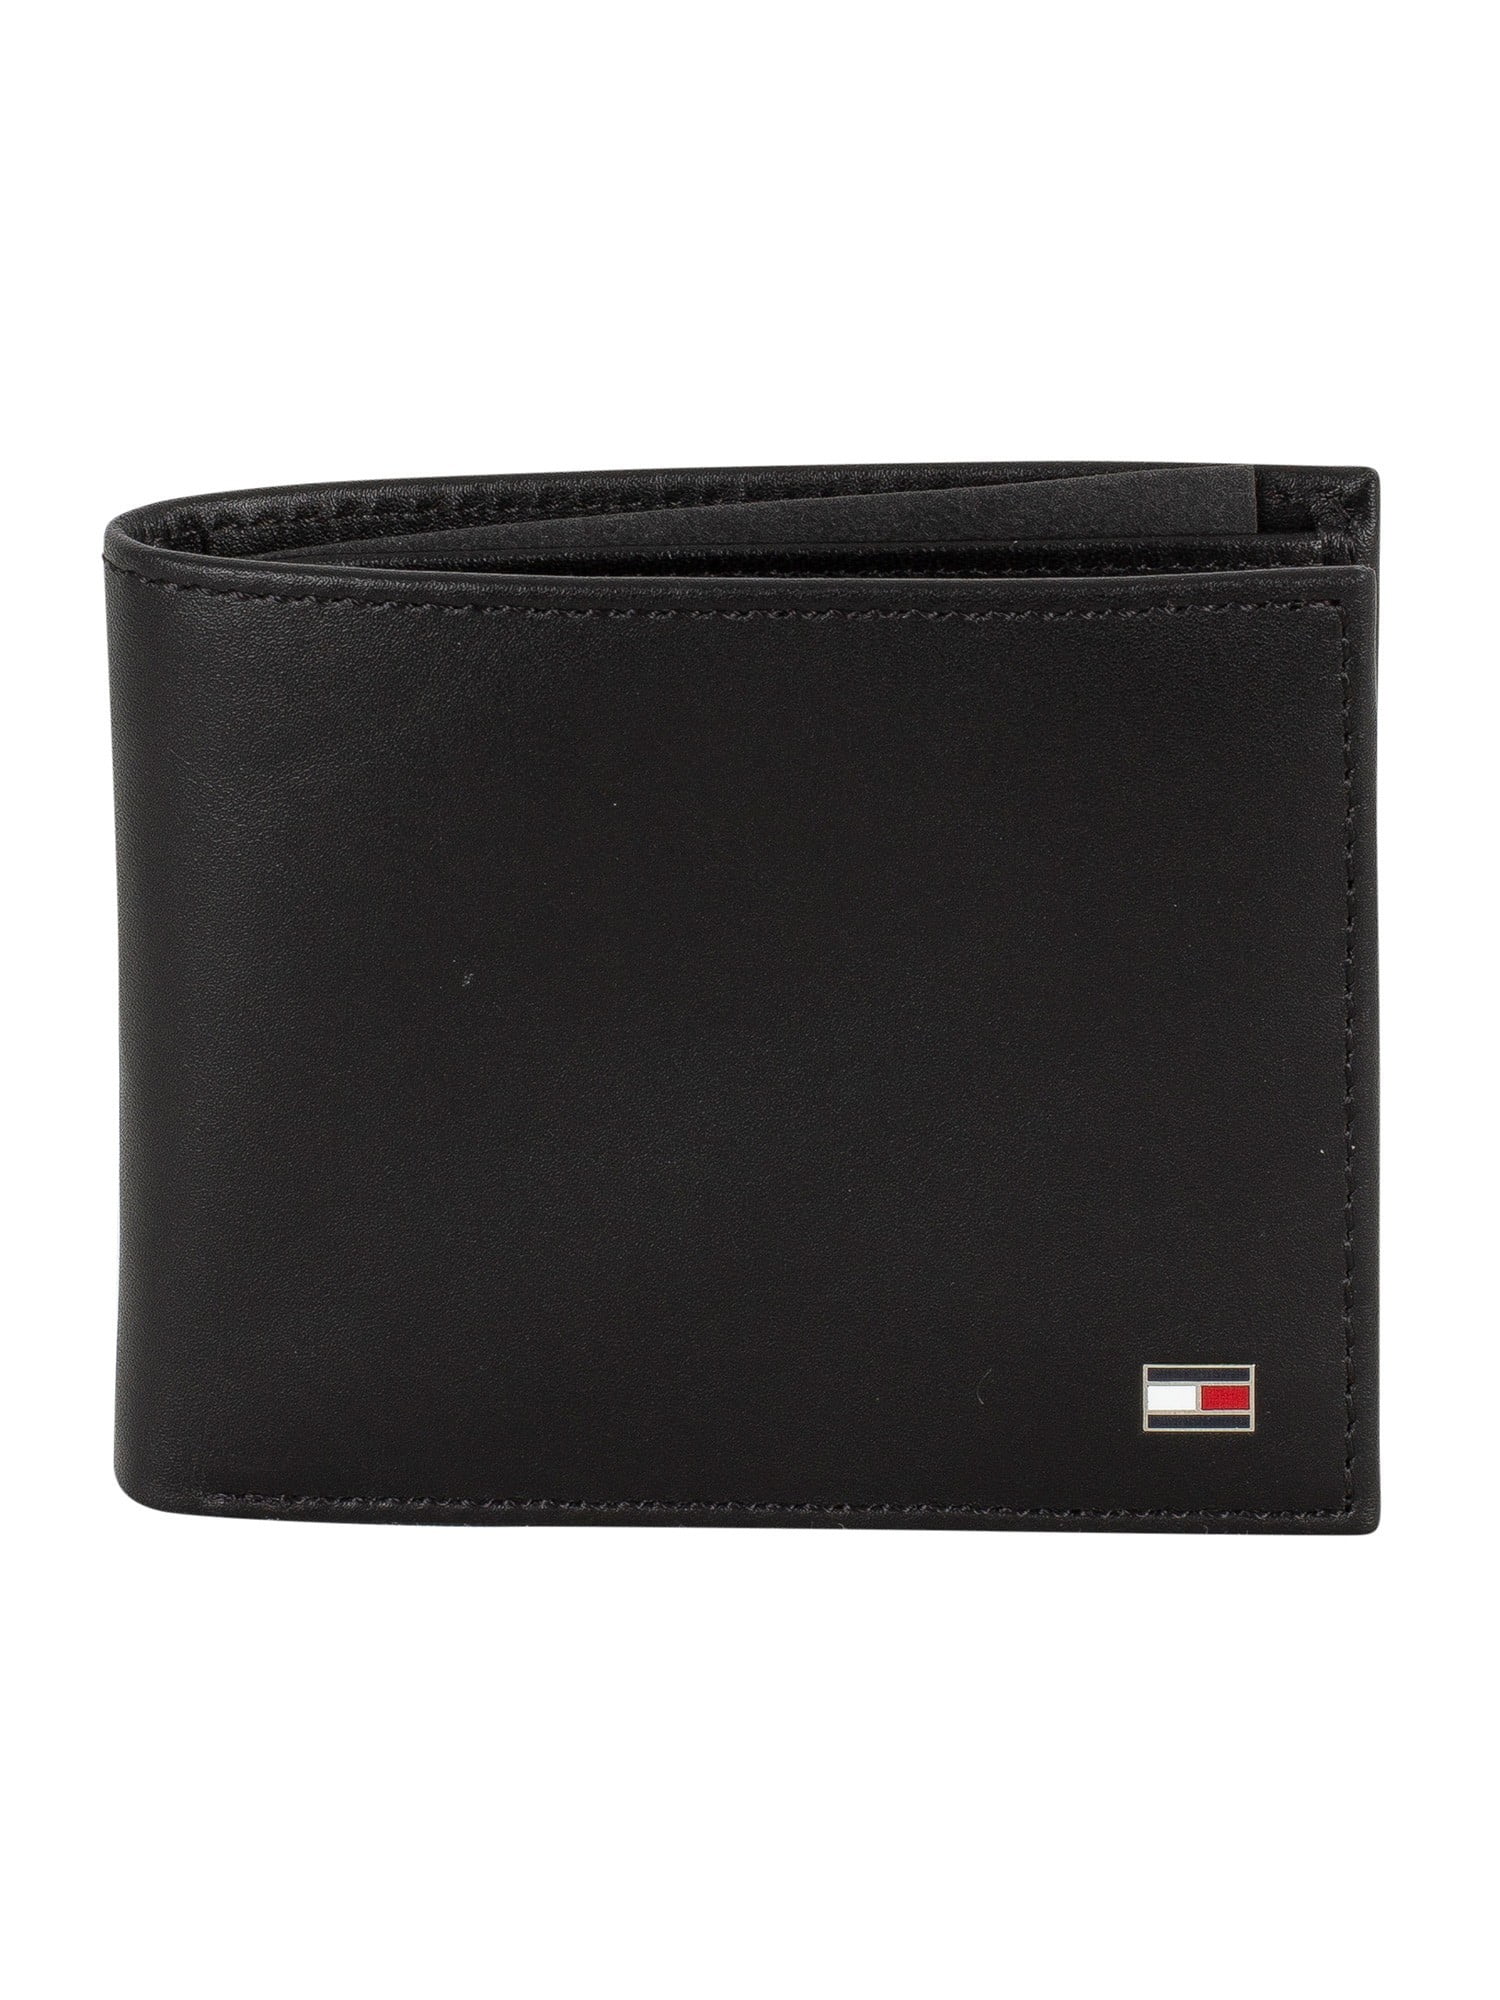 Tommy Hilfiger Eton Mini Wallet, Black